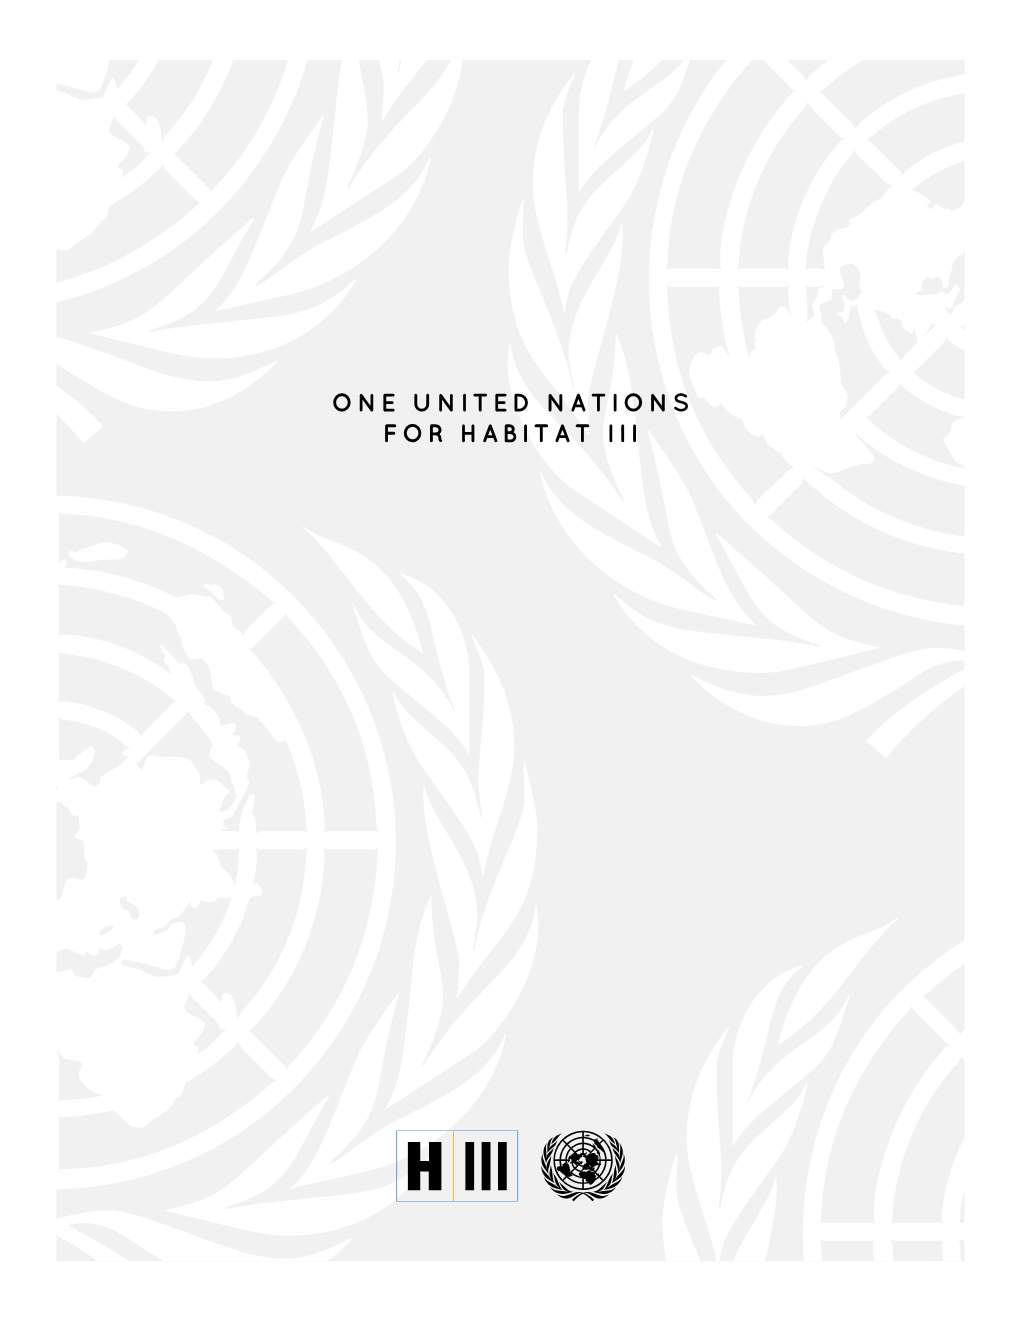 One United Nations for Habitat Iii